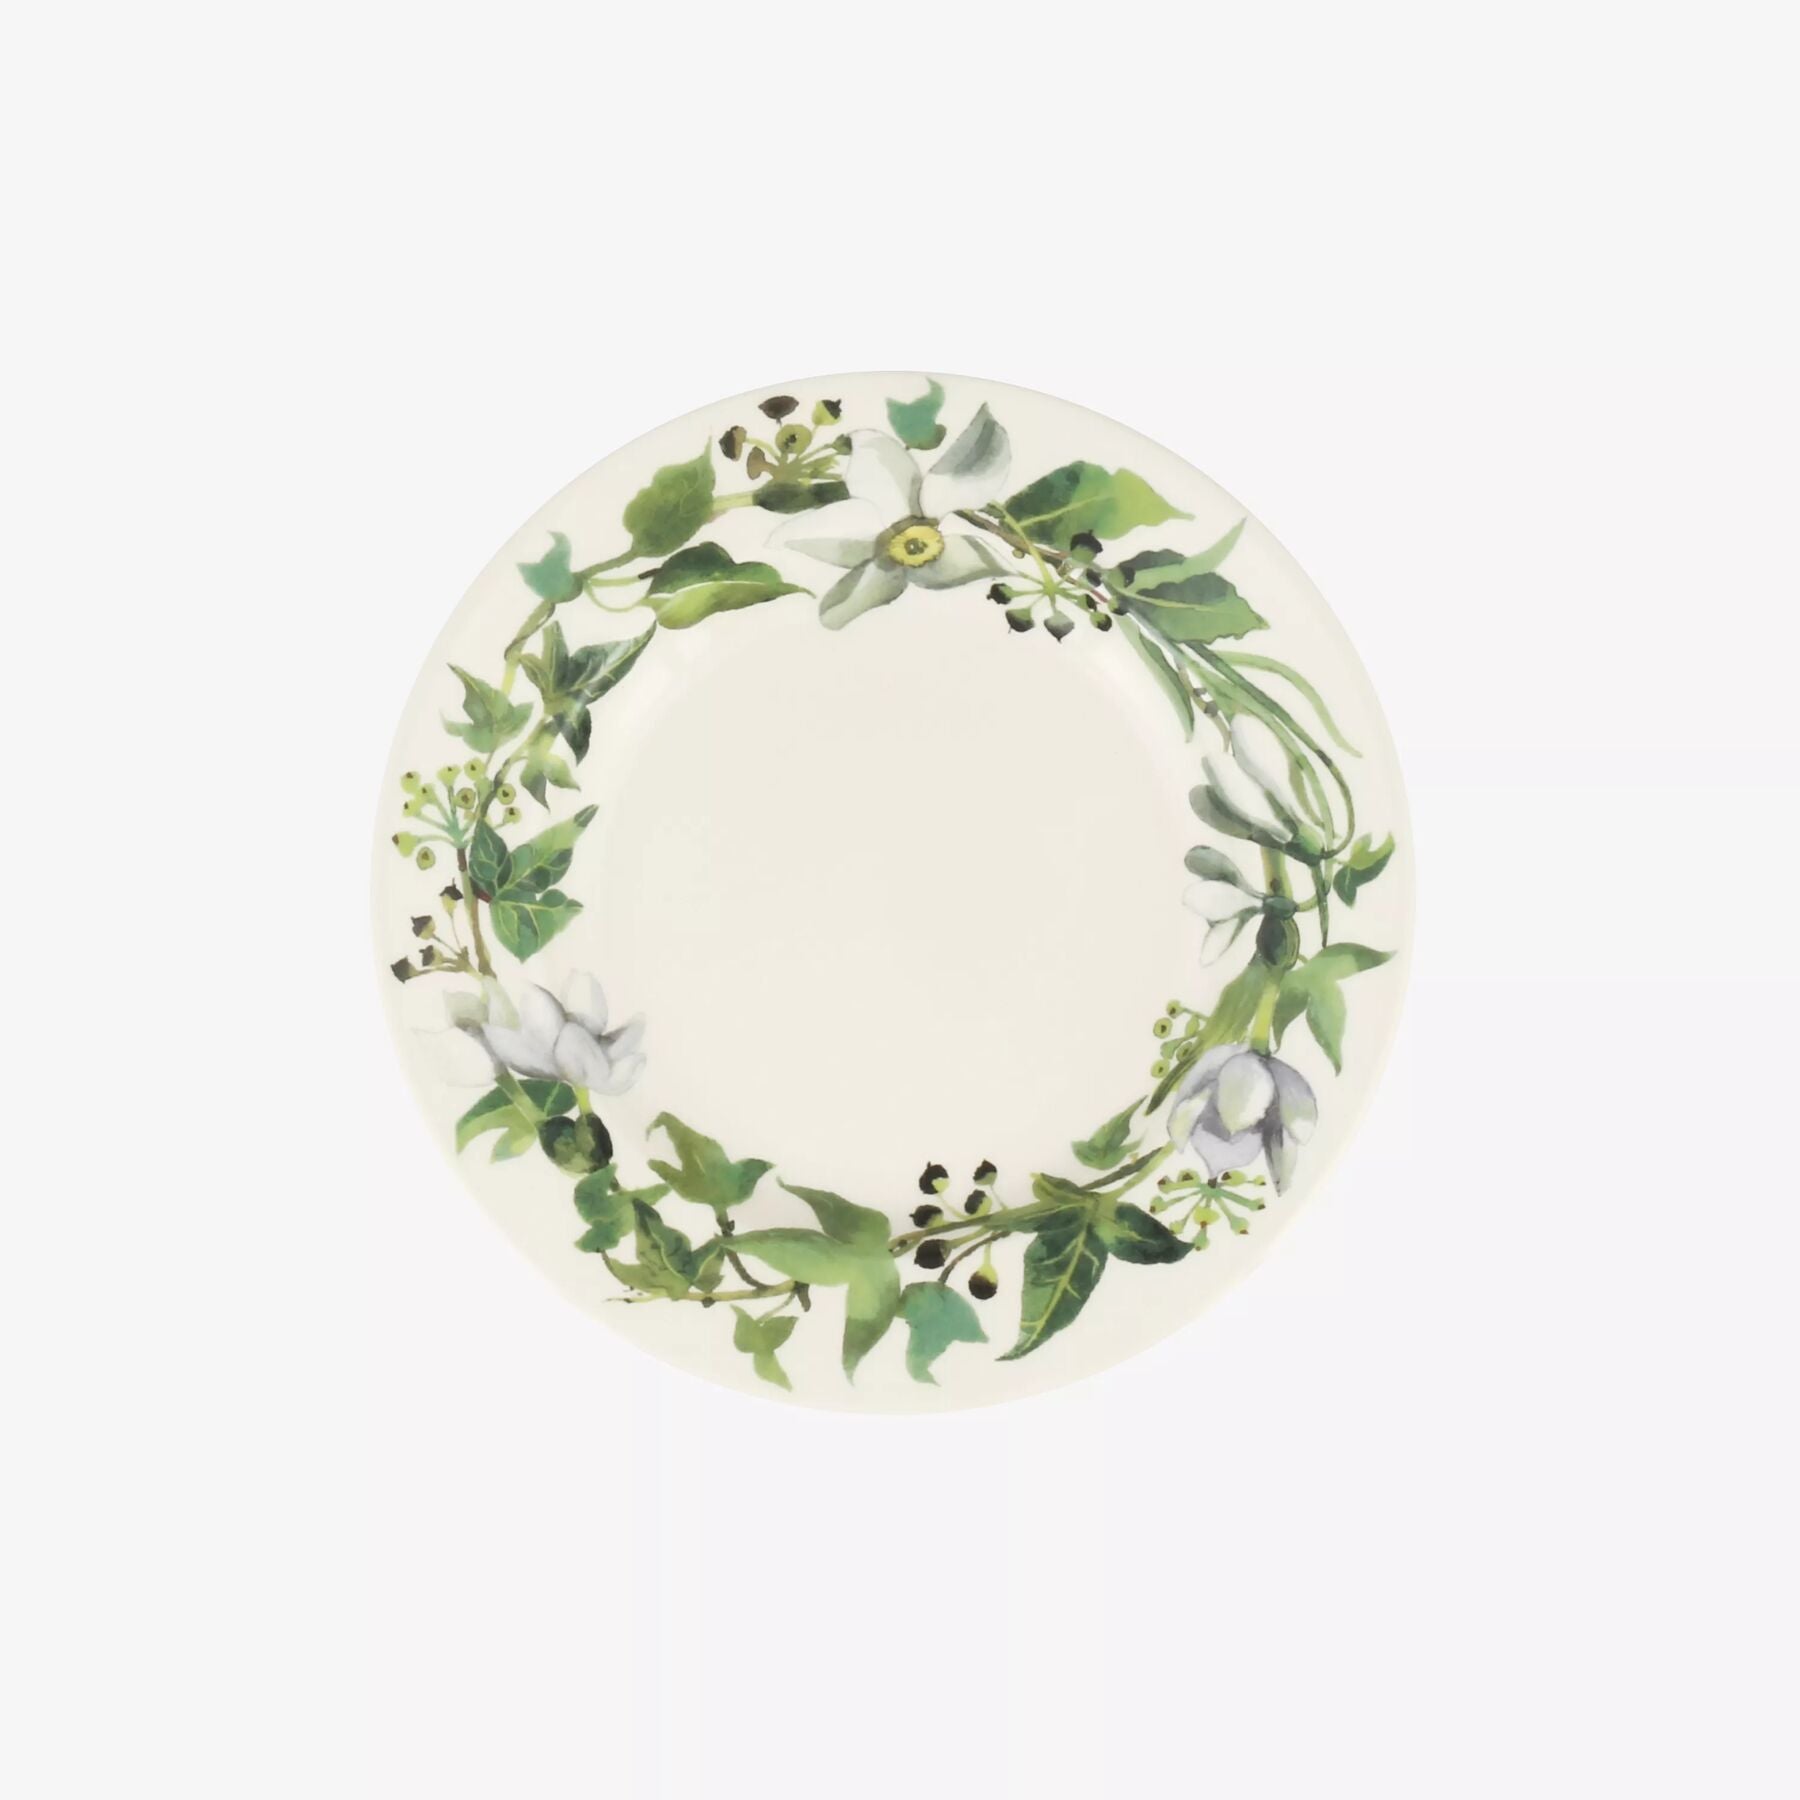 Emma Bridgewater |  Seconds Ivy 6 1/2 Inch Plate - Unique Handmade & Handpainted English Earthenware